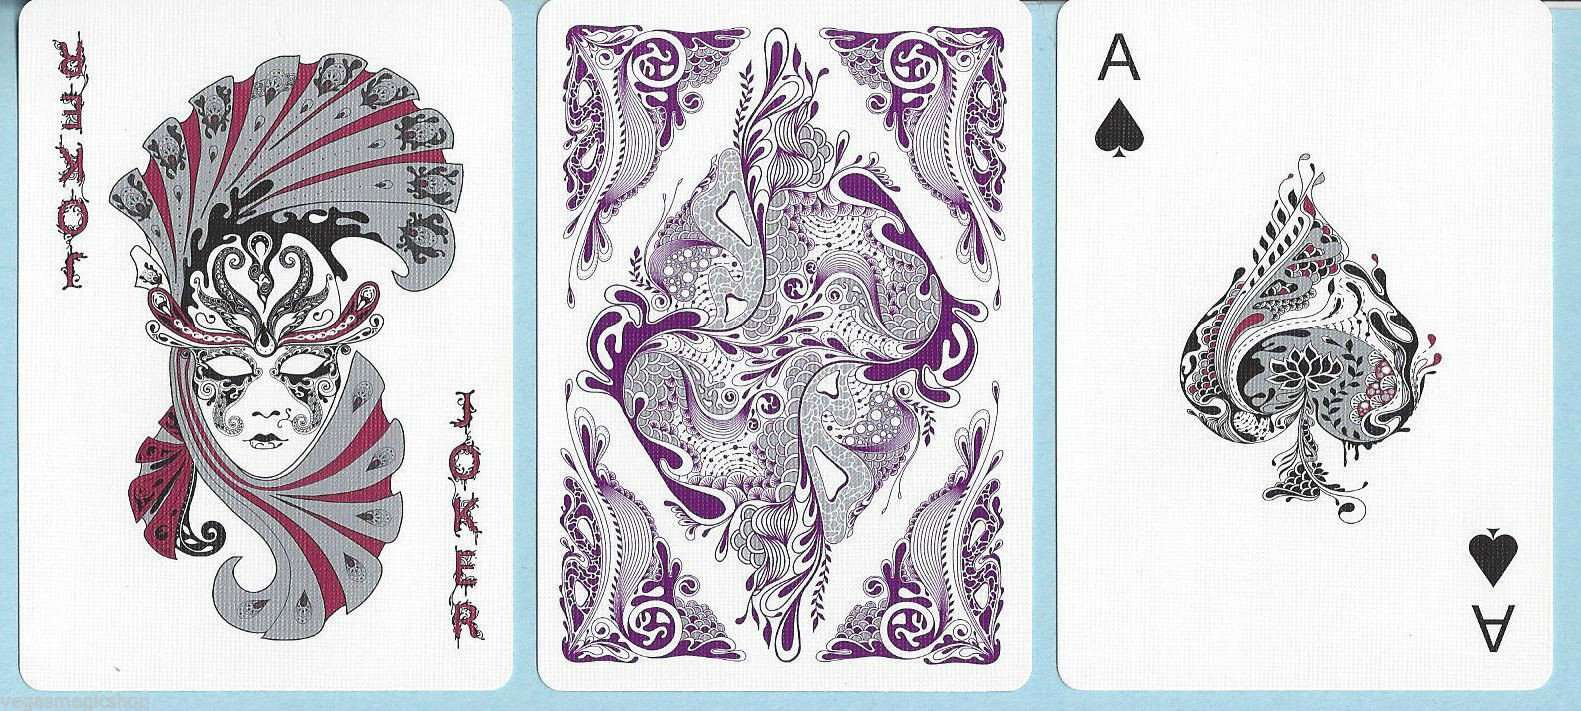 PlayingCardDecks.com-Floral Purple Playing Cards Deck